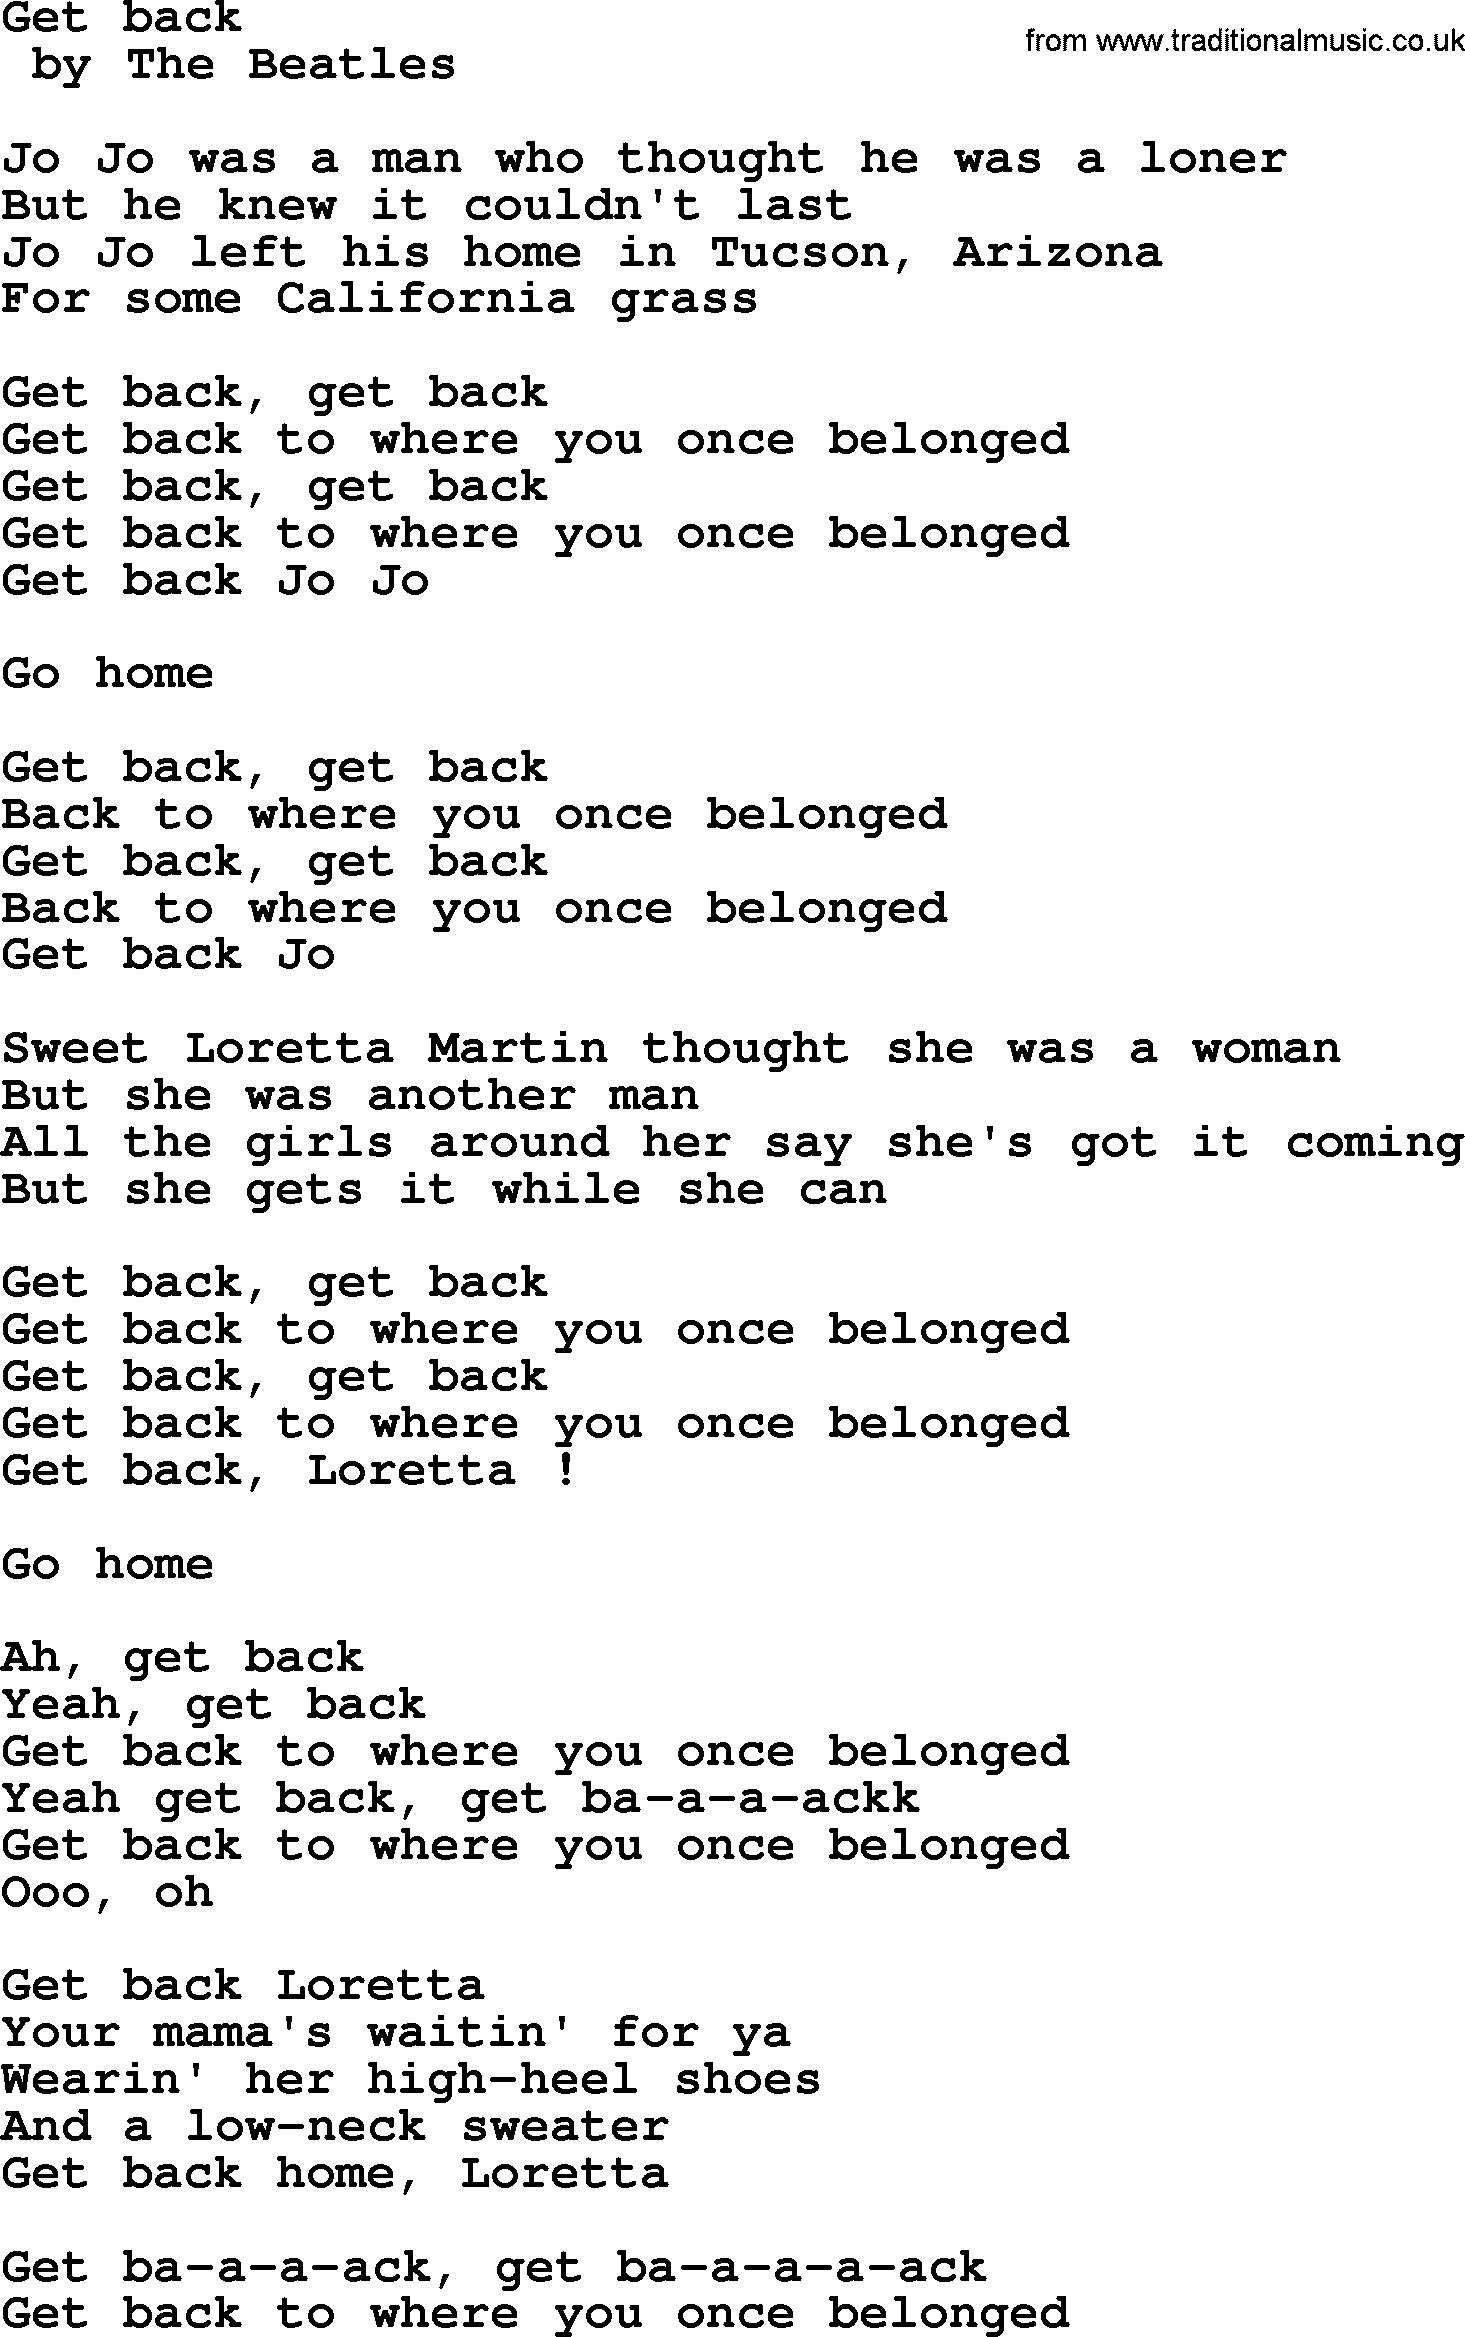 Bruce Springsteen song: Get Back lyrics